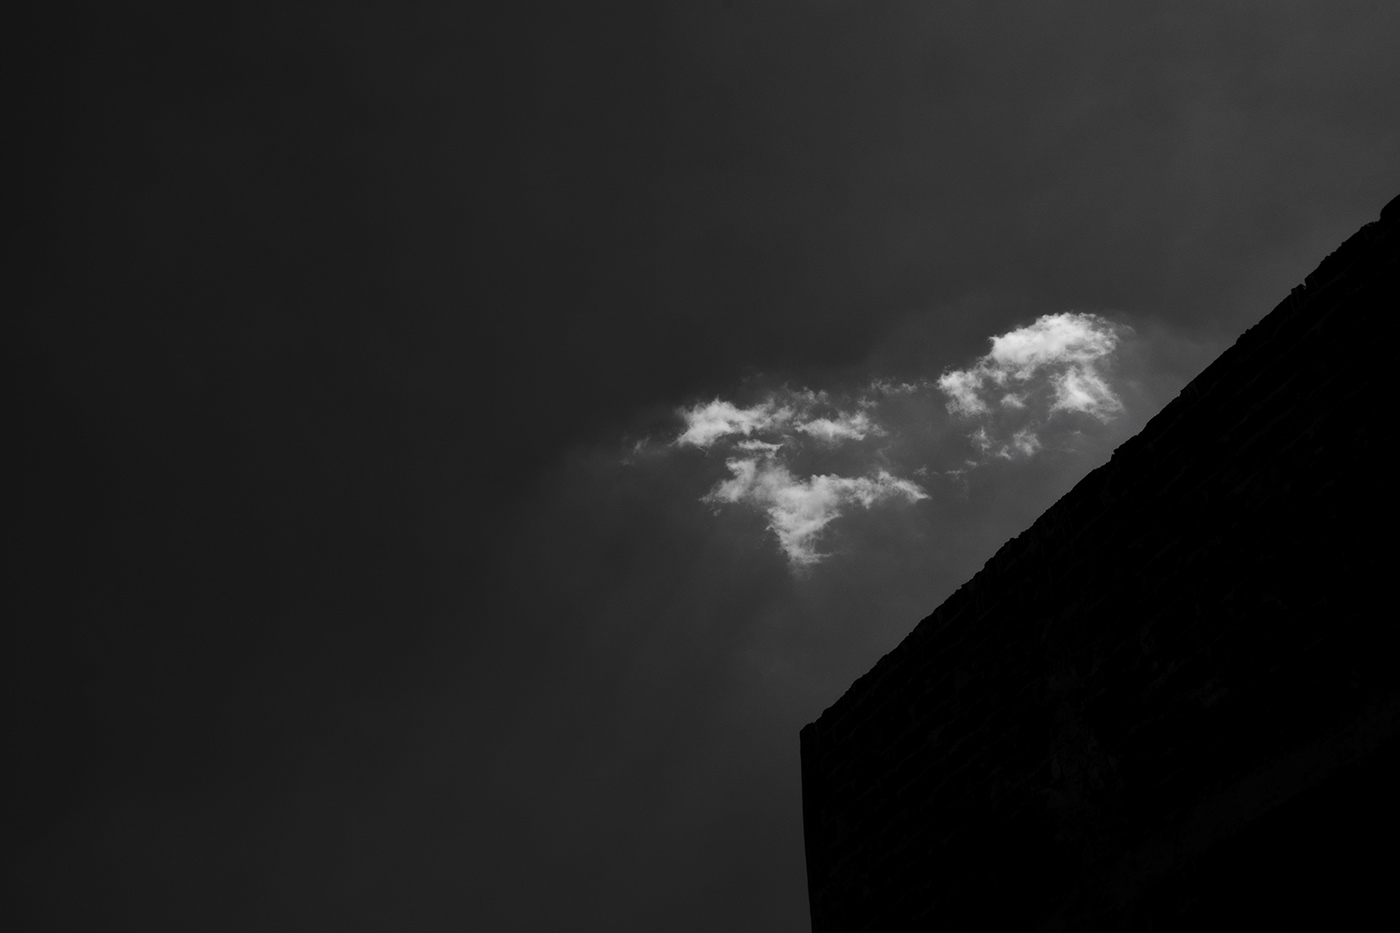 art clouds monochrome black and white envoirment ambiente photoart photowork